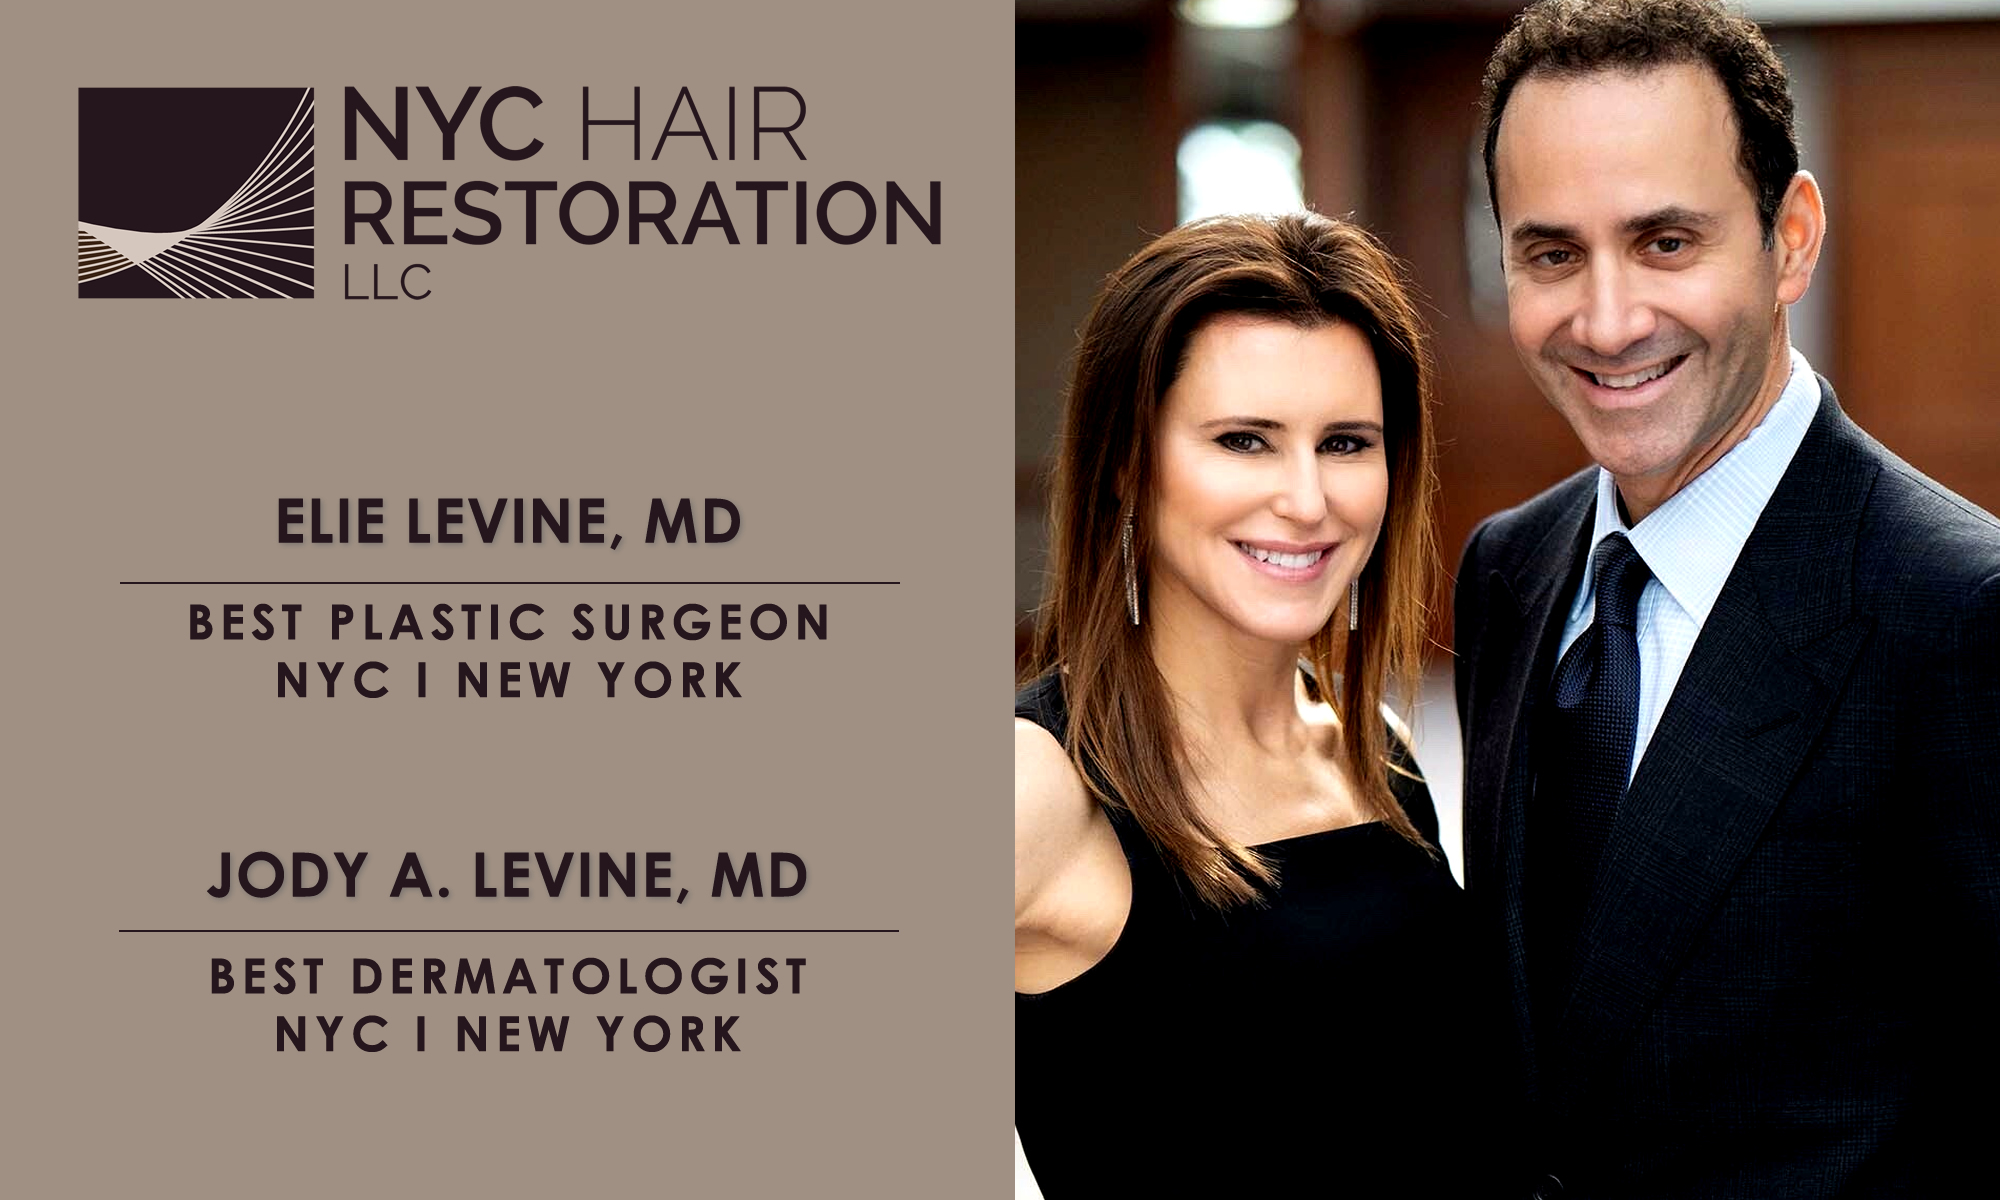 NYC Hair Restoration | Treating Hair Loss in NYC